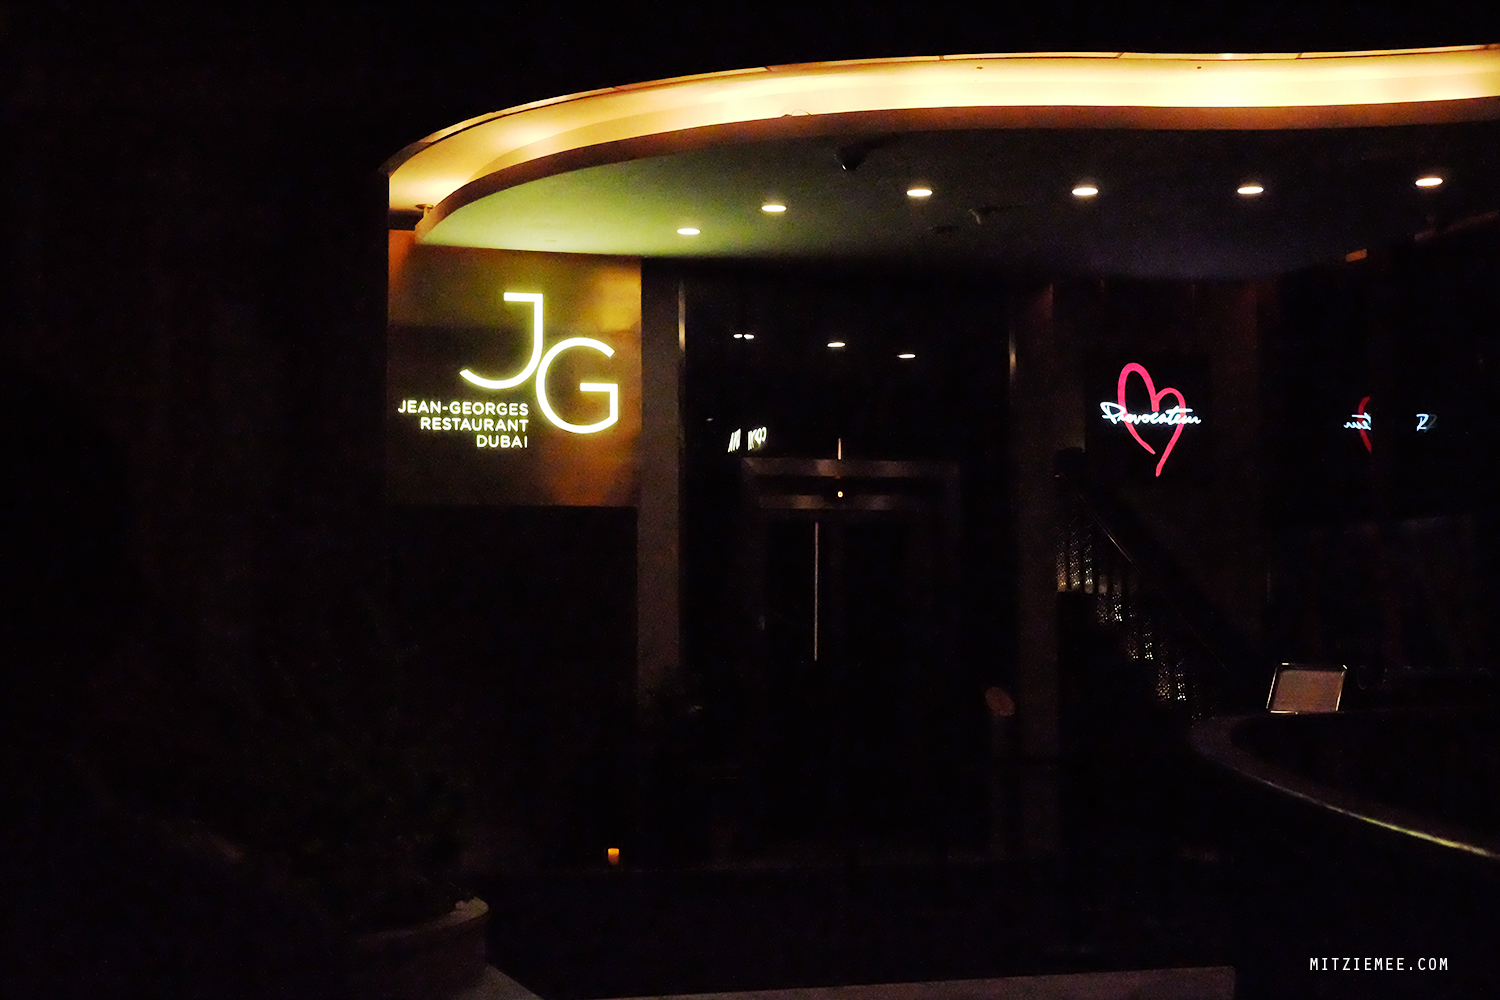 Jean-Georges Dining Room Dubai